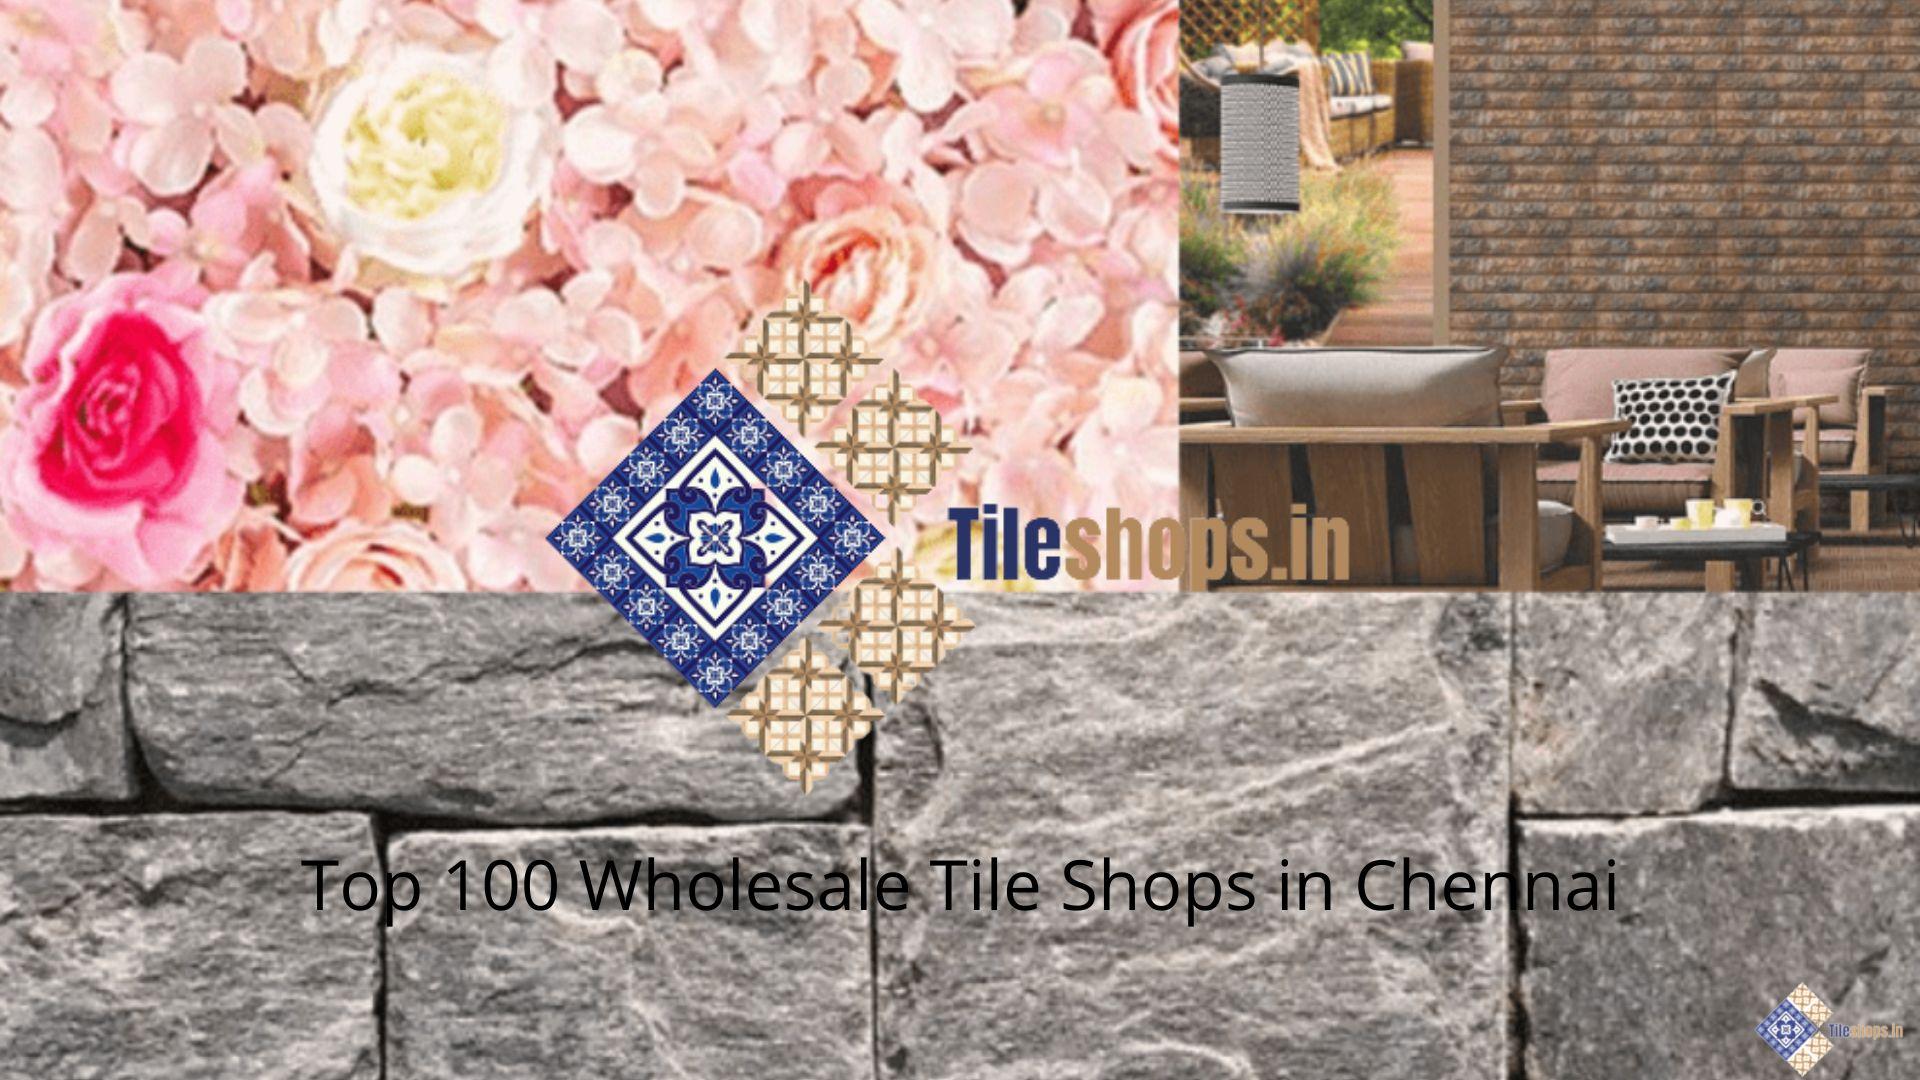 Top 100 Wholesale Tile Shops in Chennai